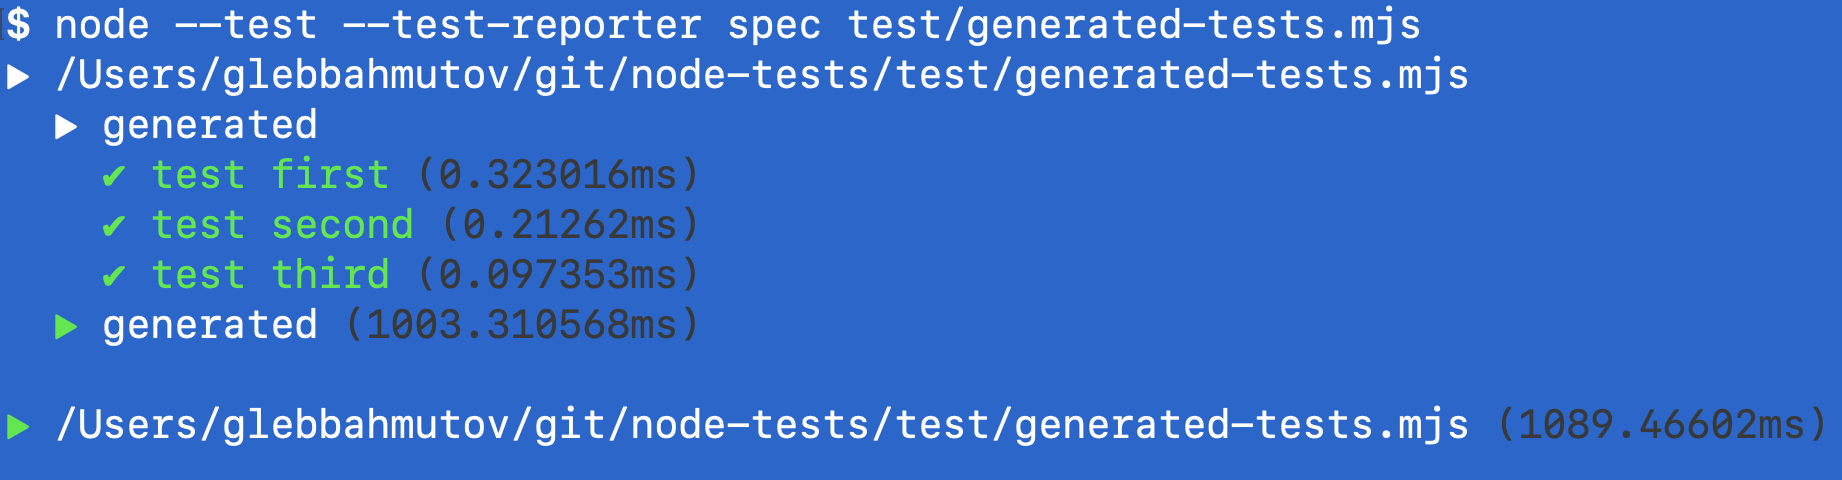 Generates three tests from three items